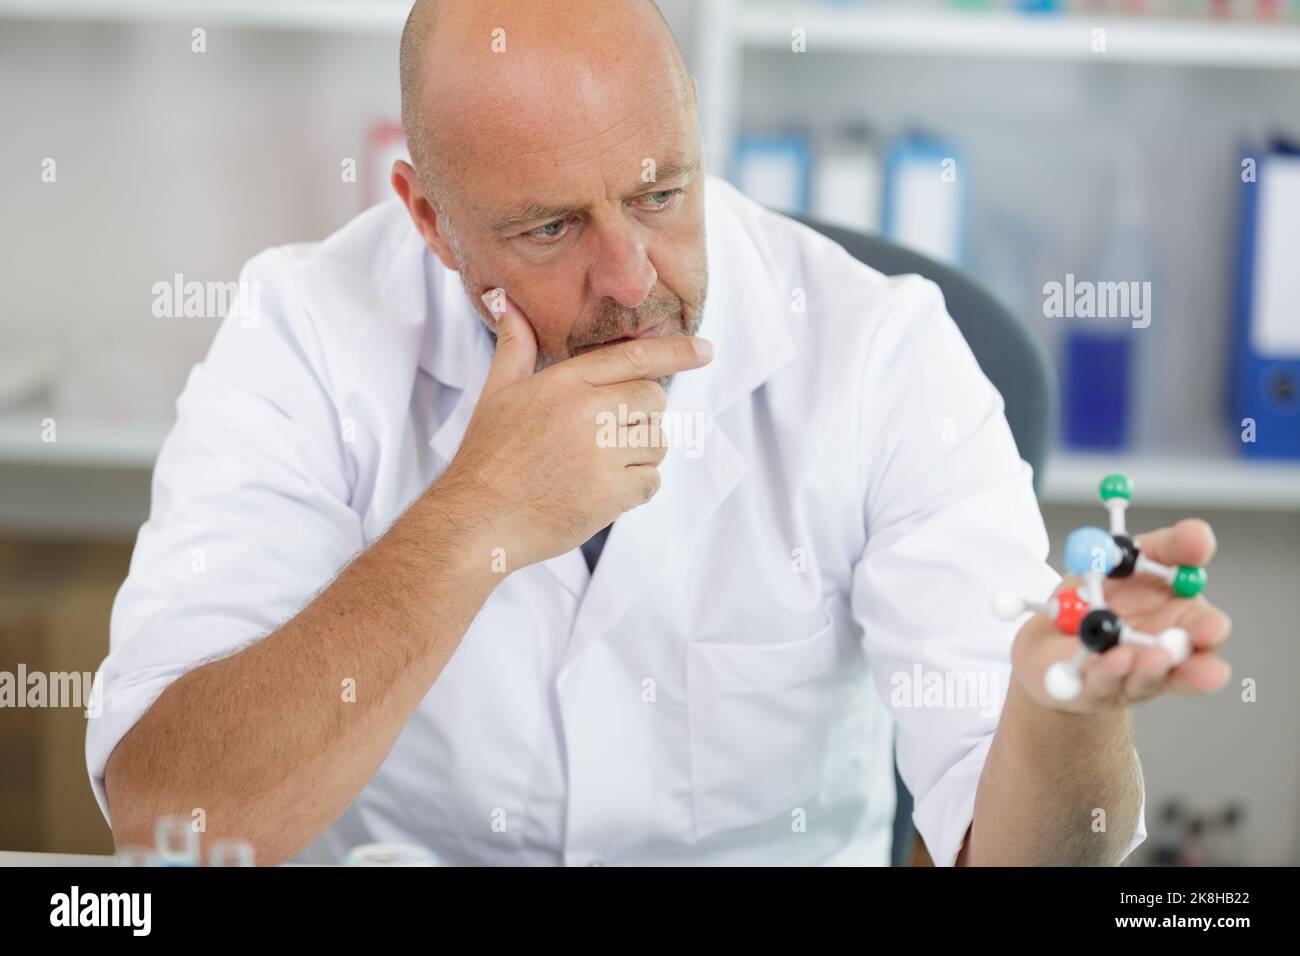 man scientist holding an atom model Stock Photo